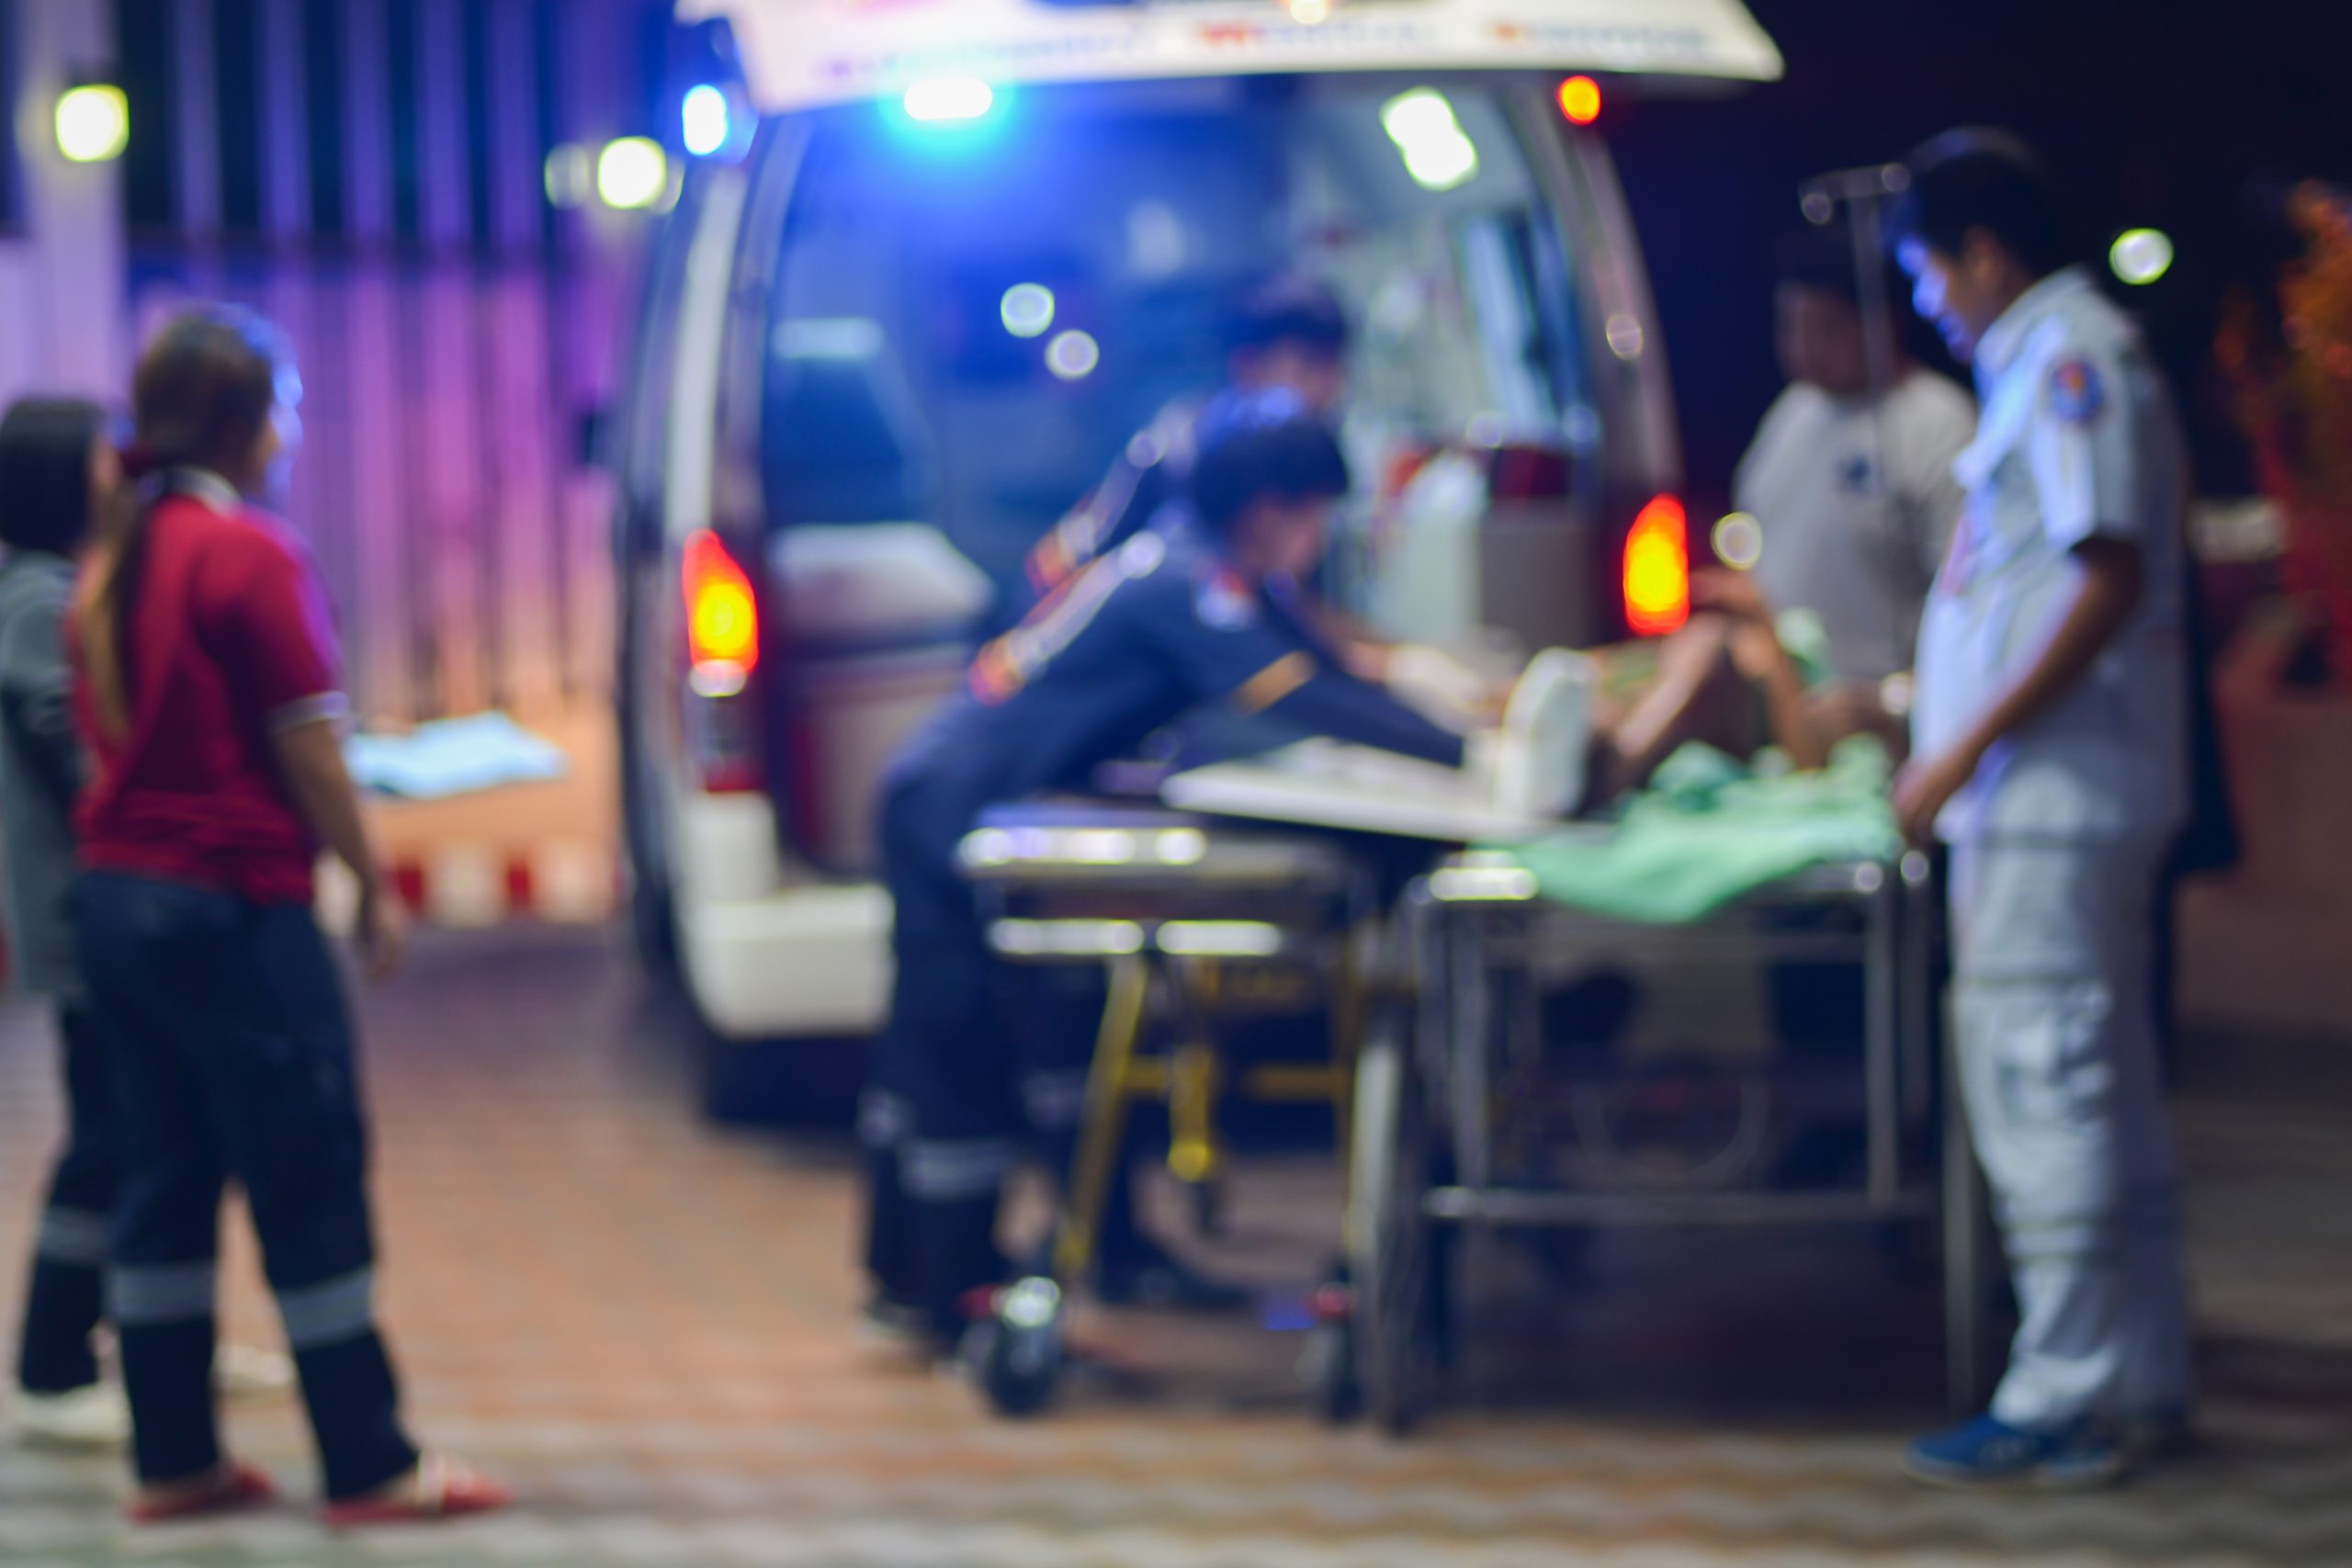 paramedics assisting person with severe mental illness onto ambulance gurney. A crisis preparedness resource